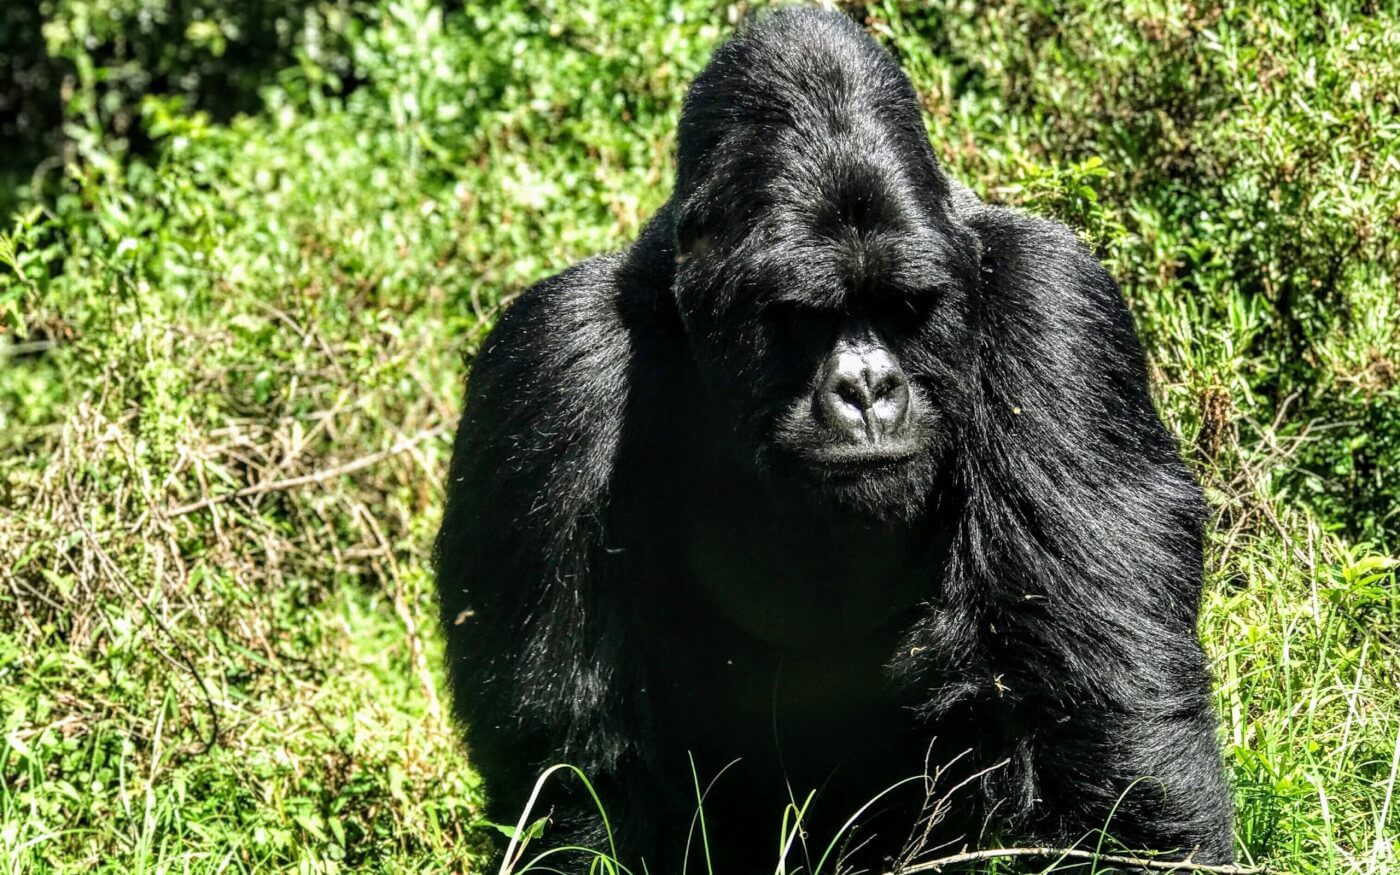 A gorilla sits peacefully in Uganda